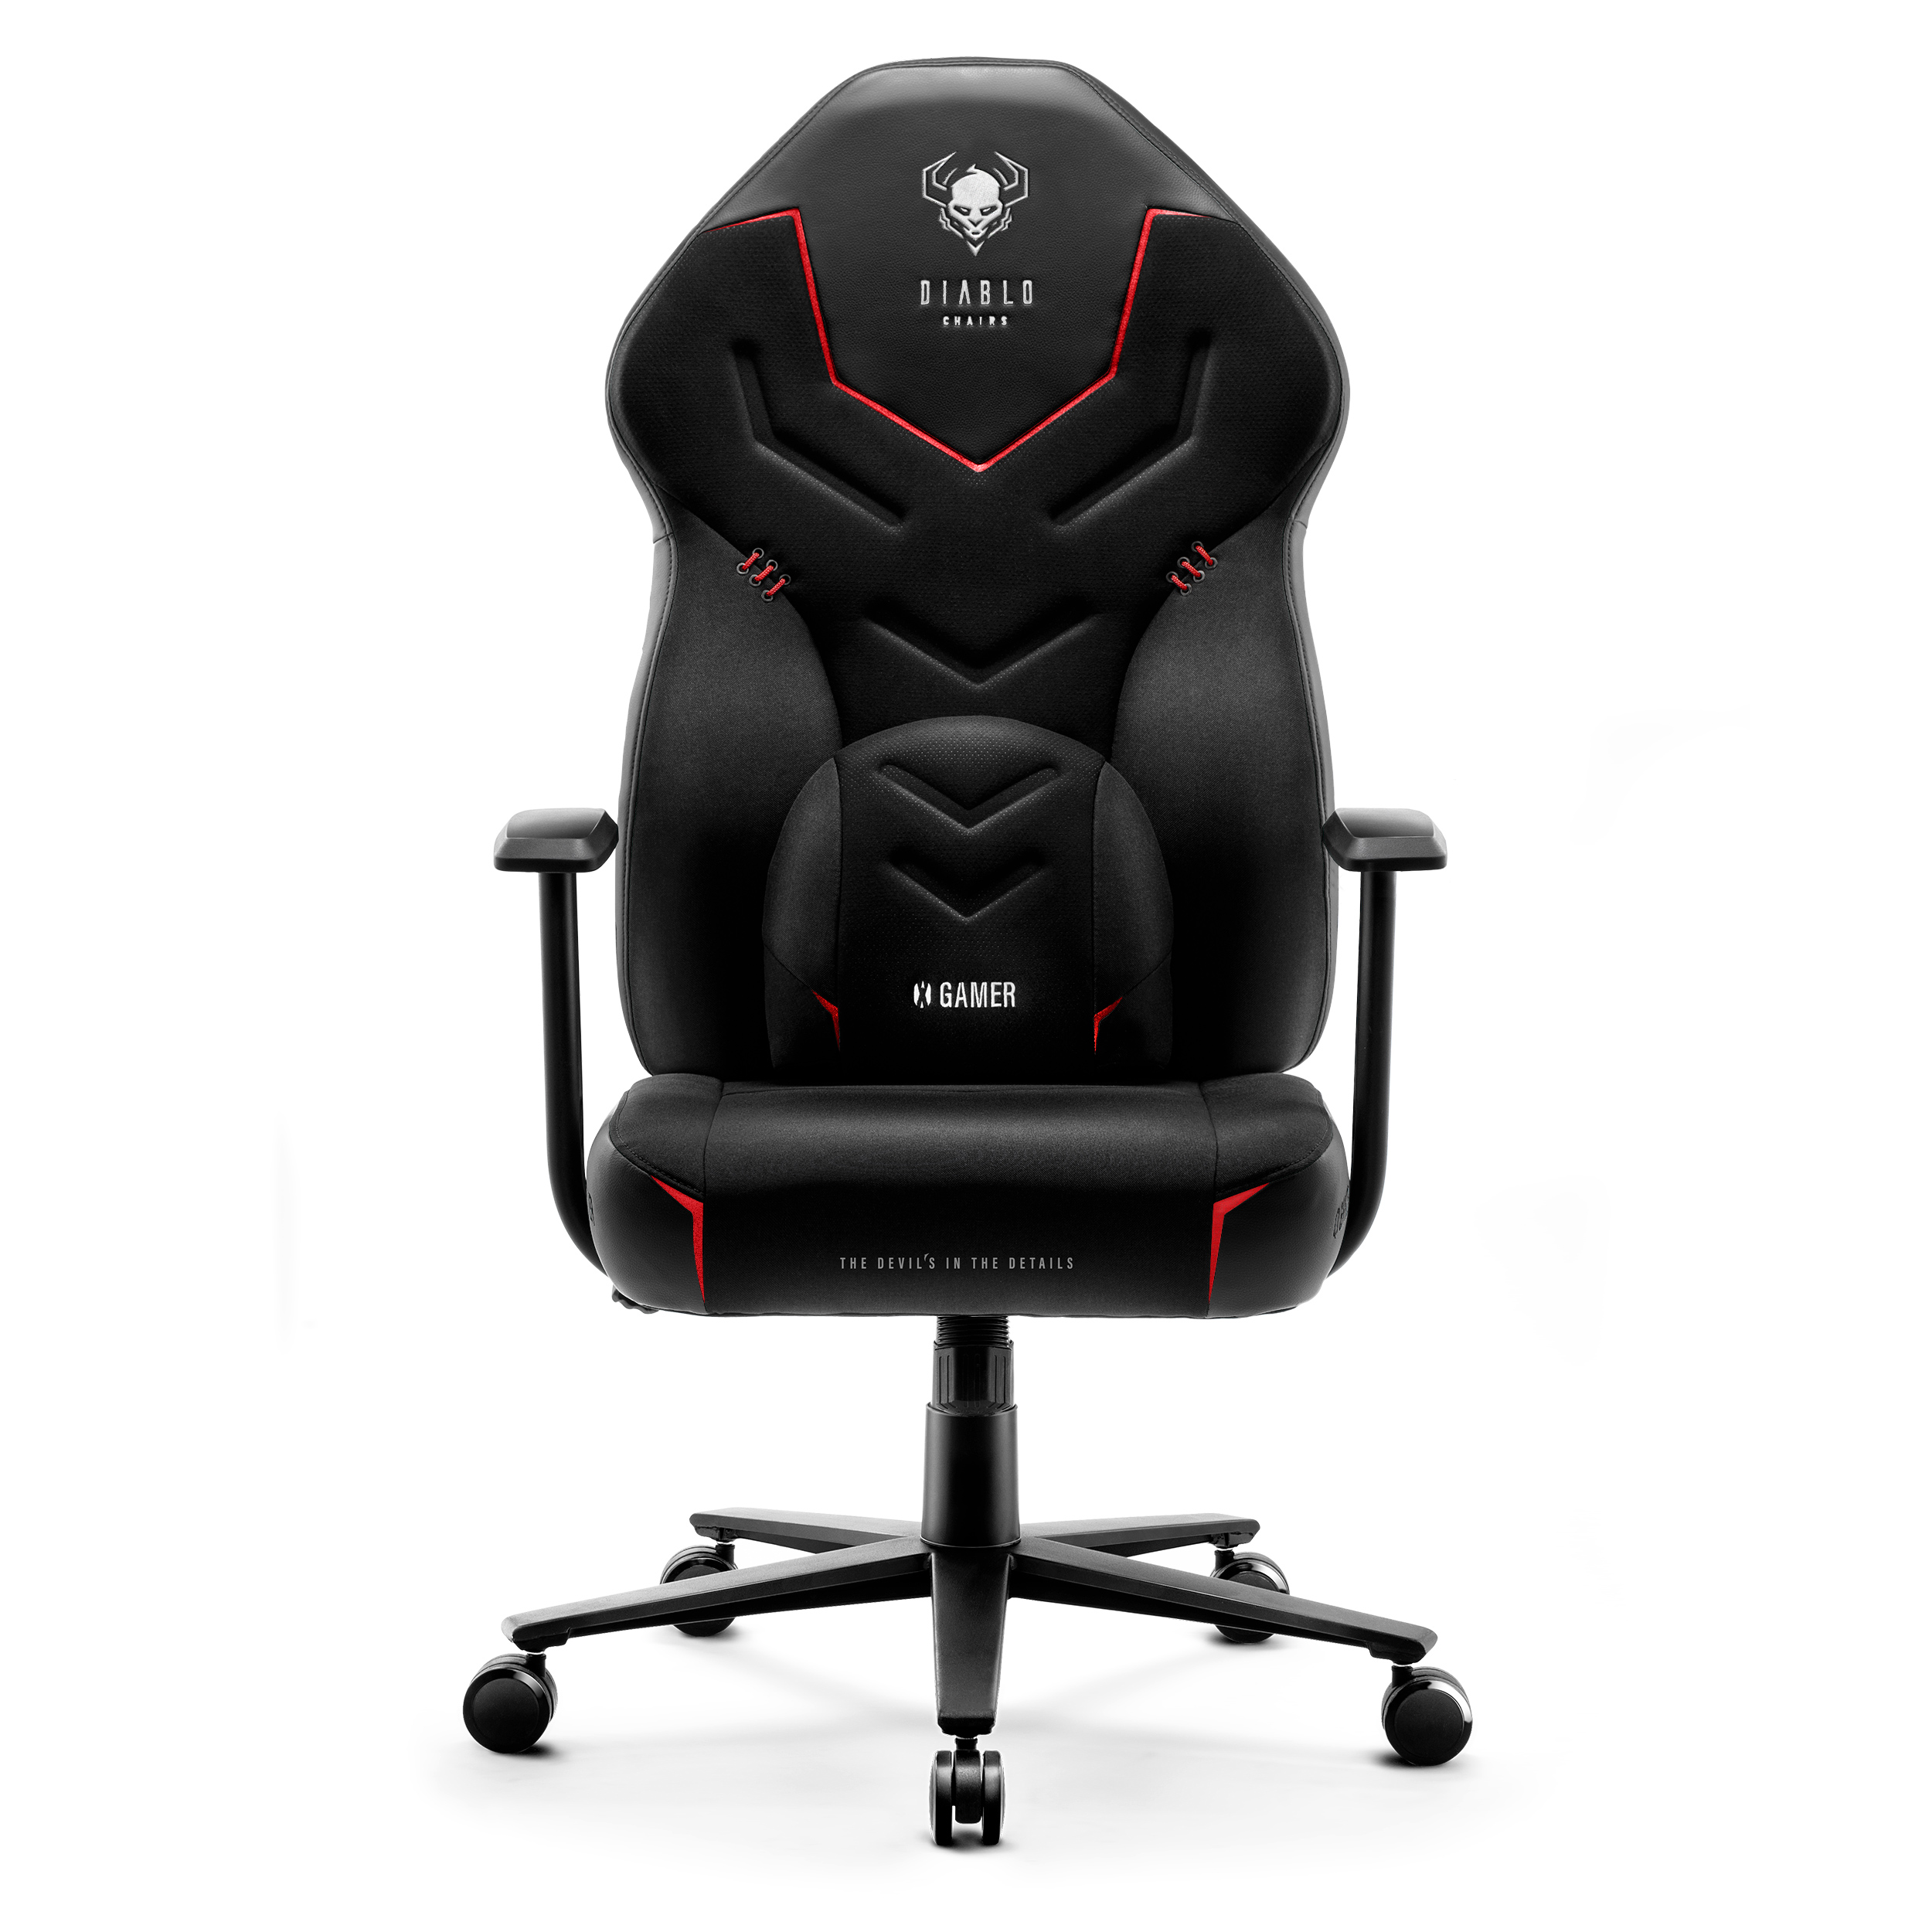 2.0 CHAIRS NORMAL Chair, STUHL X-GAMER Gaming DIABLO black GAMING